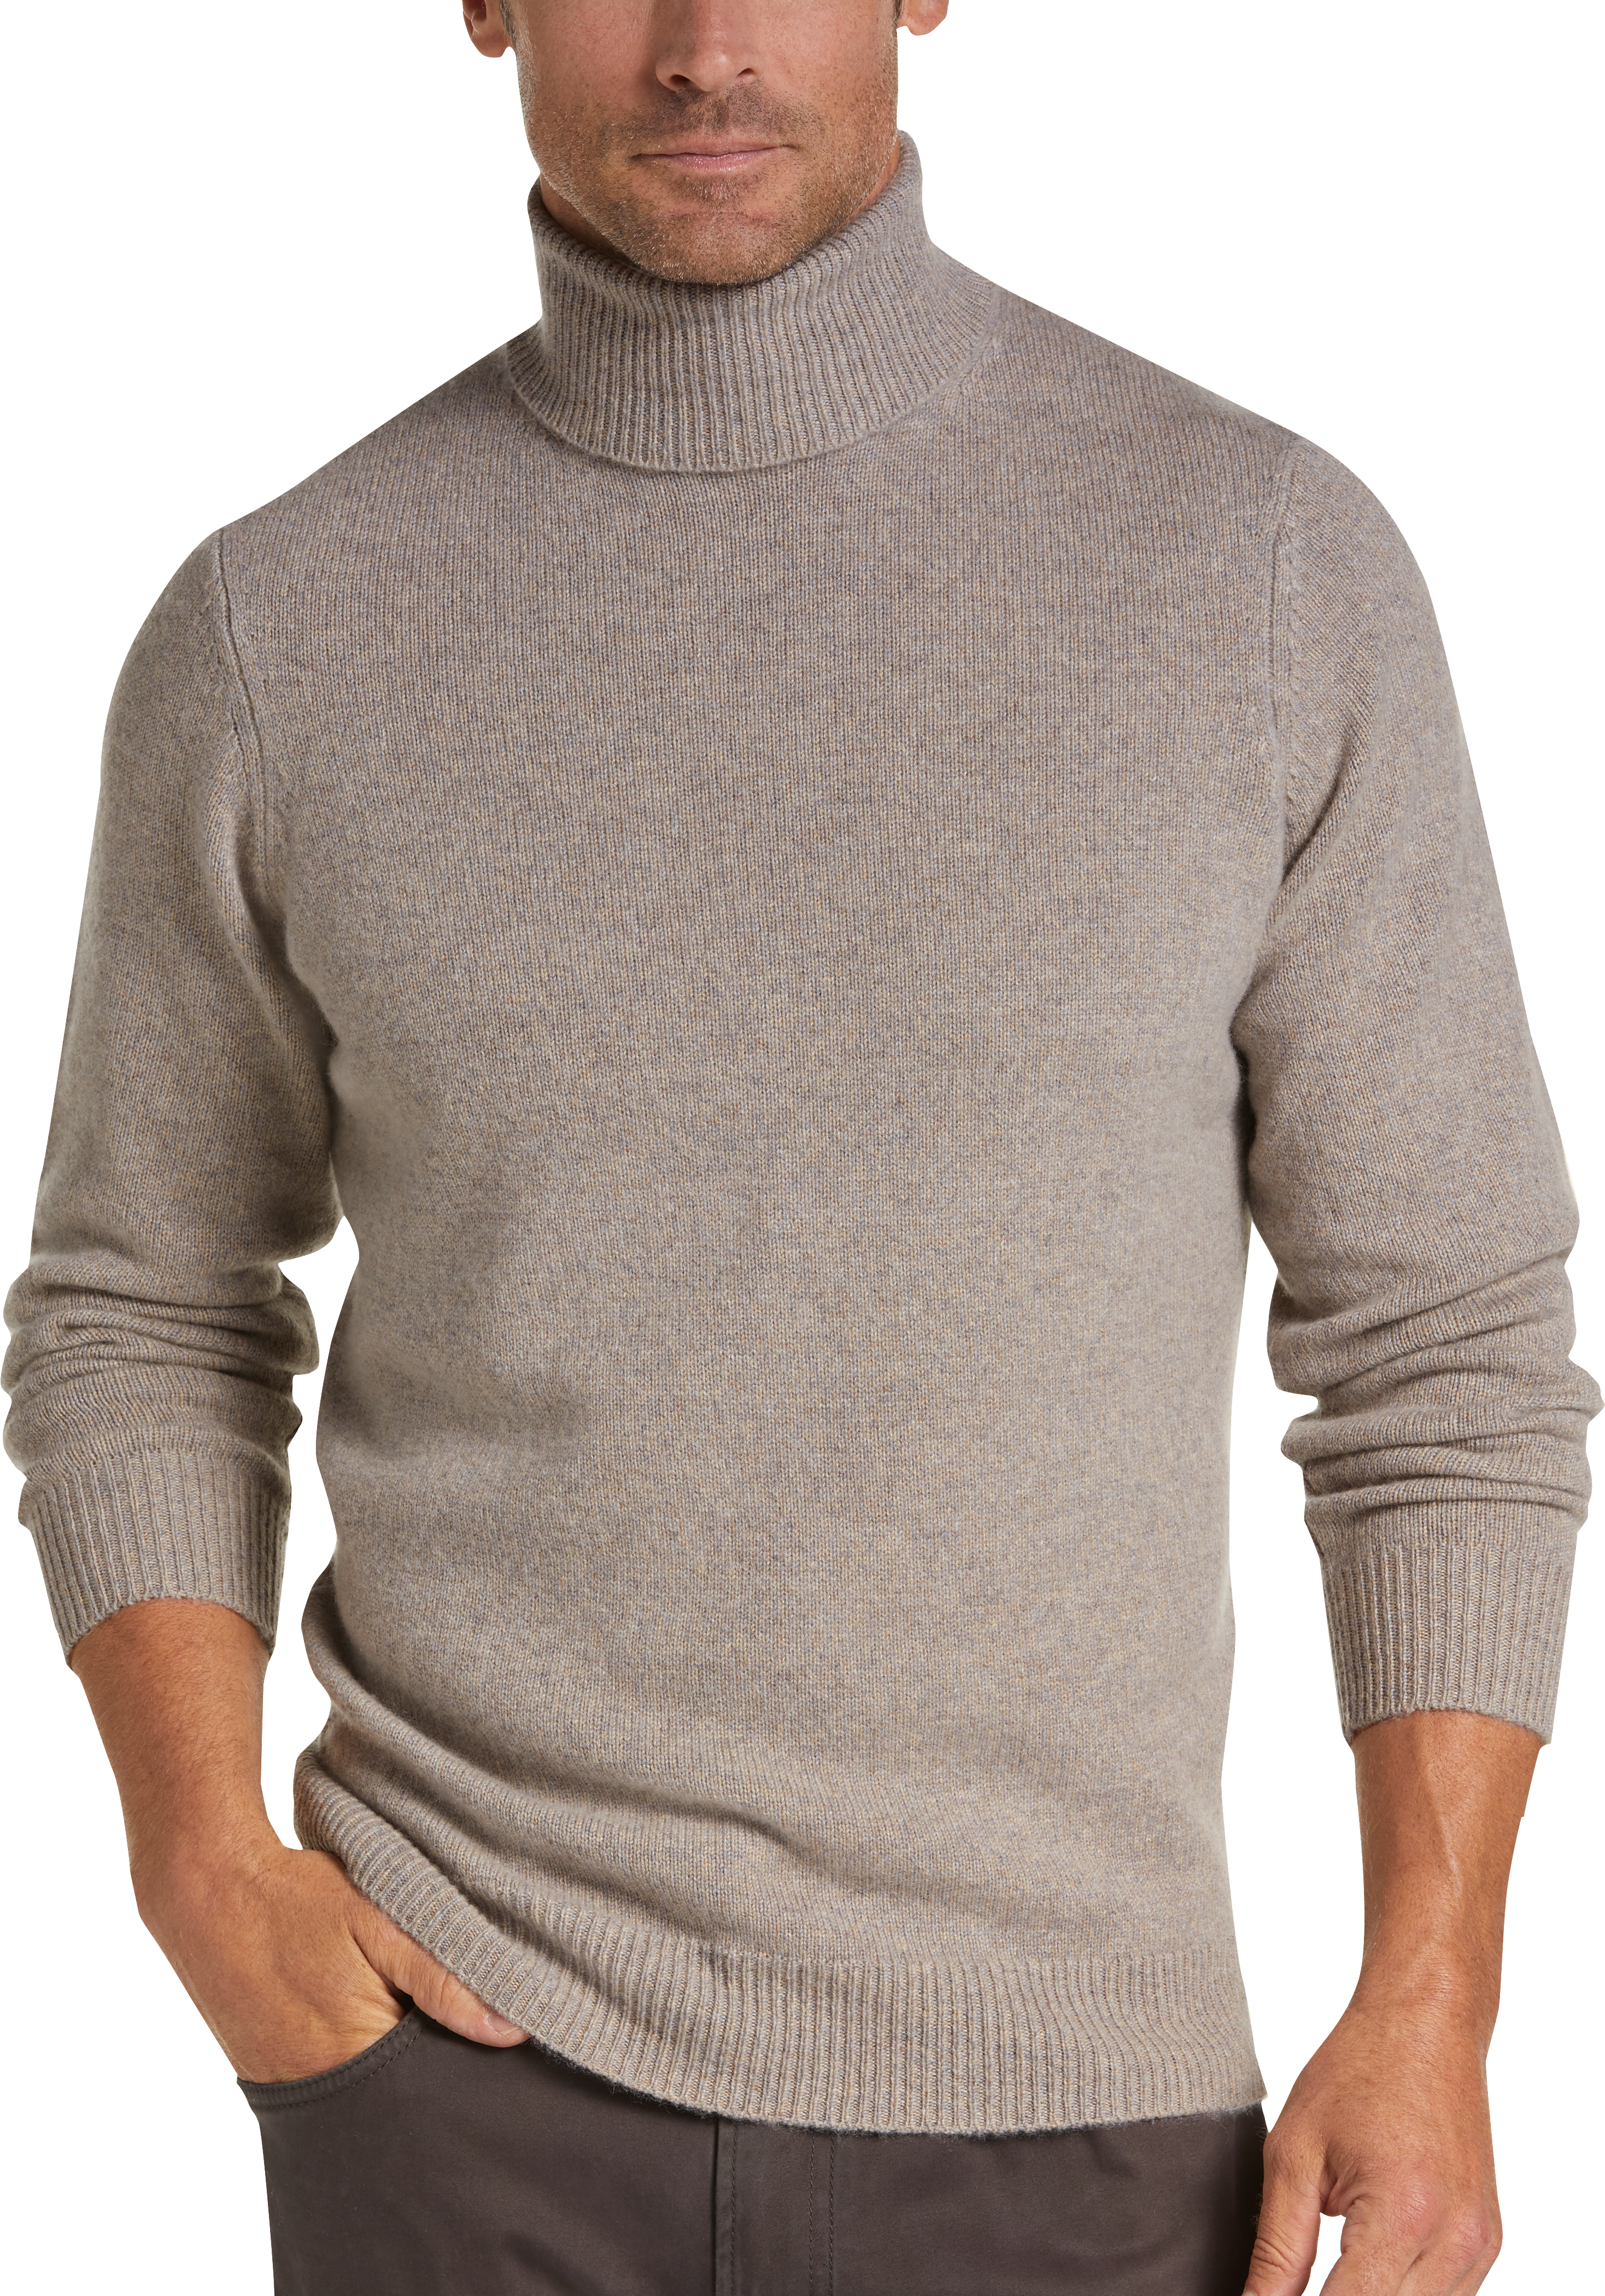 Joseph Abboud Limited Edition Wheat Cashmere Turtleneck Sweater - Men's ...